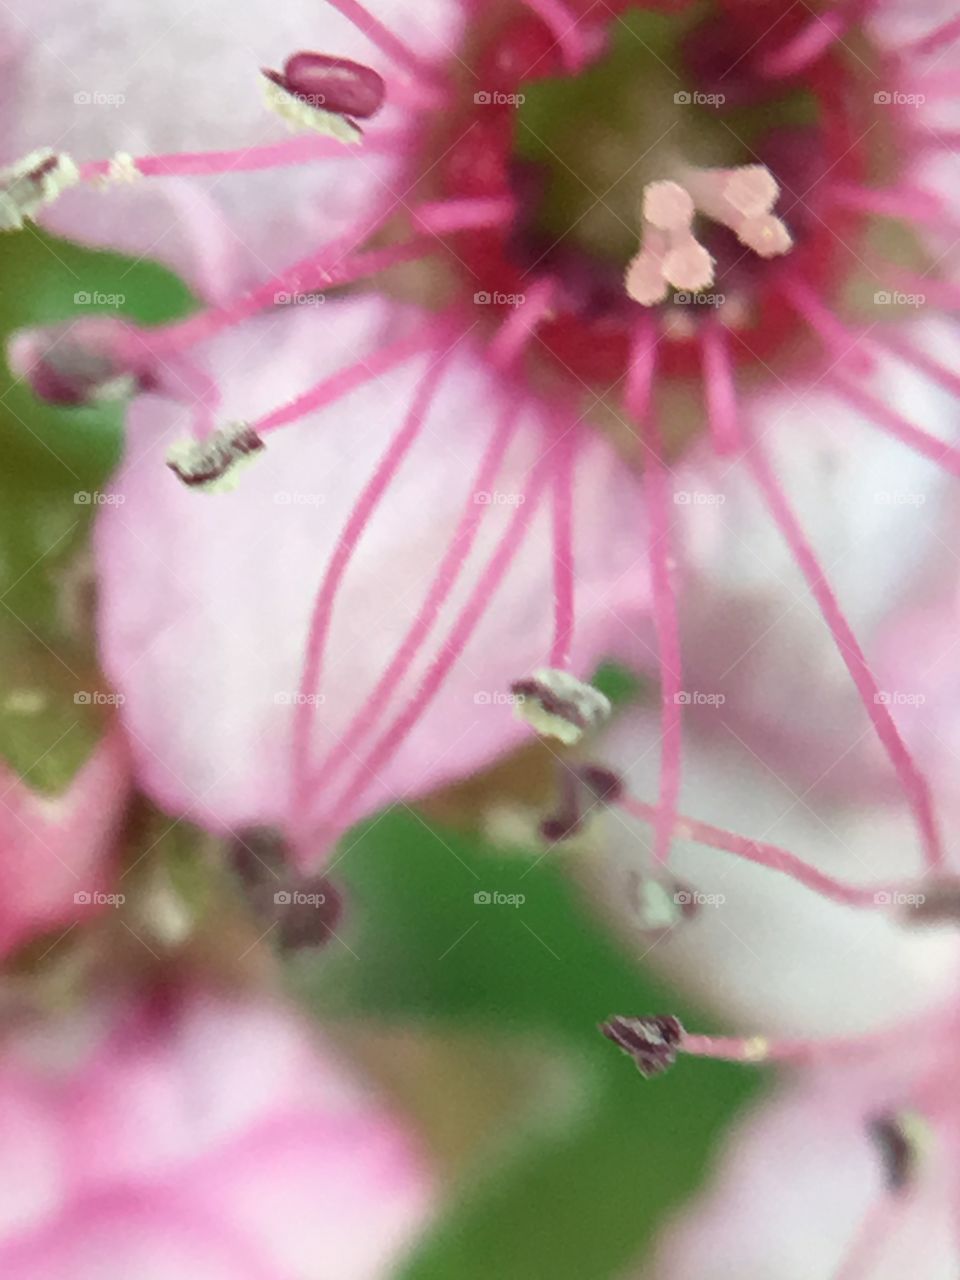 x15 macro shot of a flowering bush